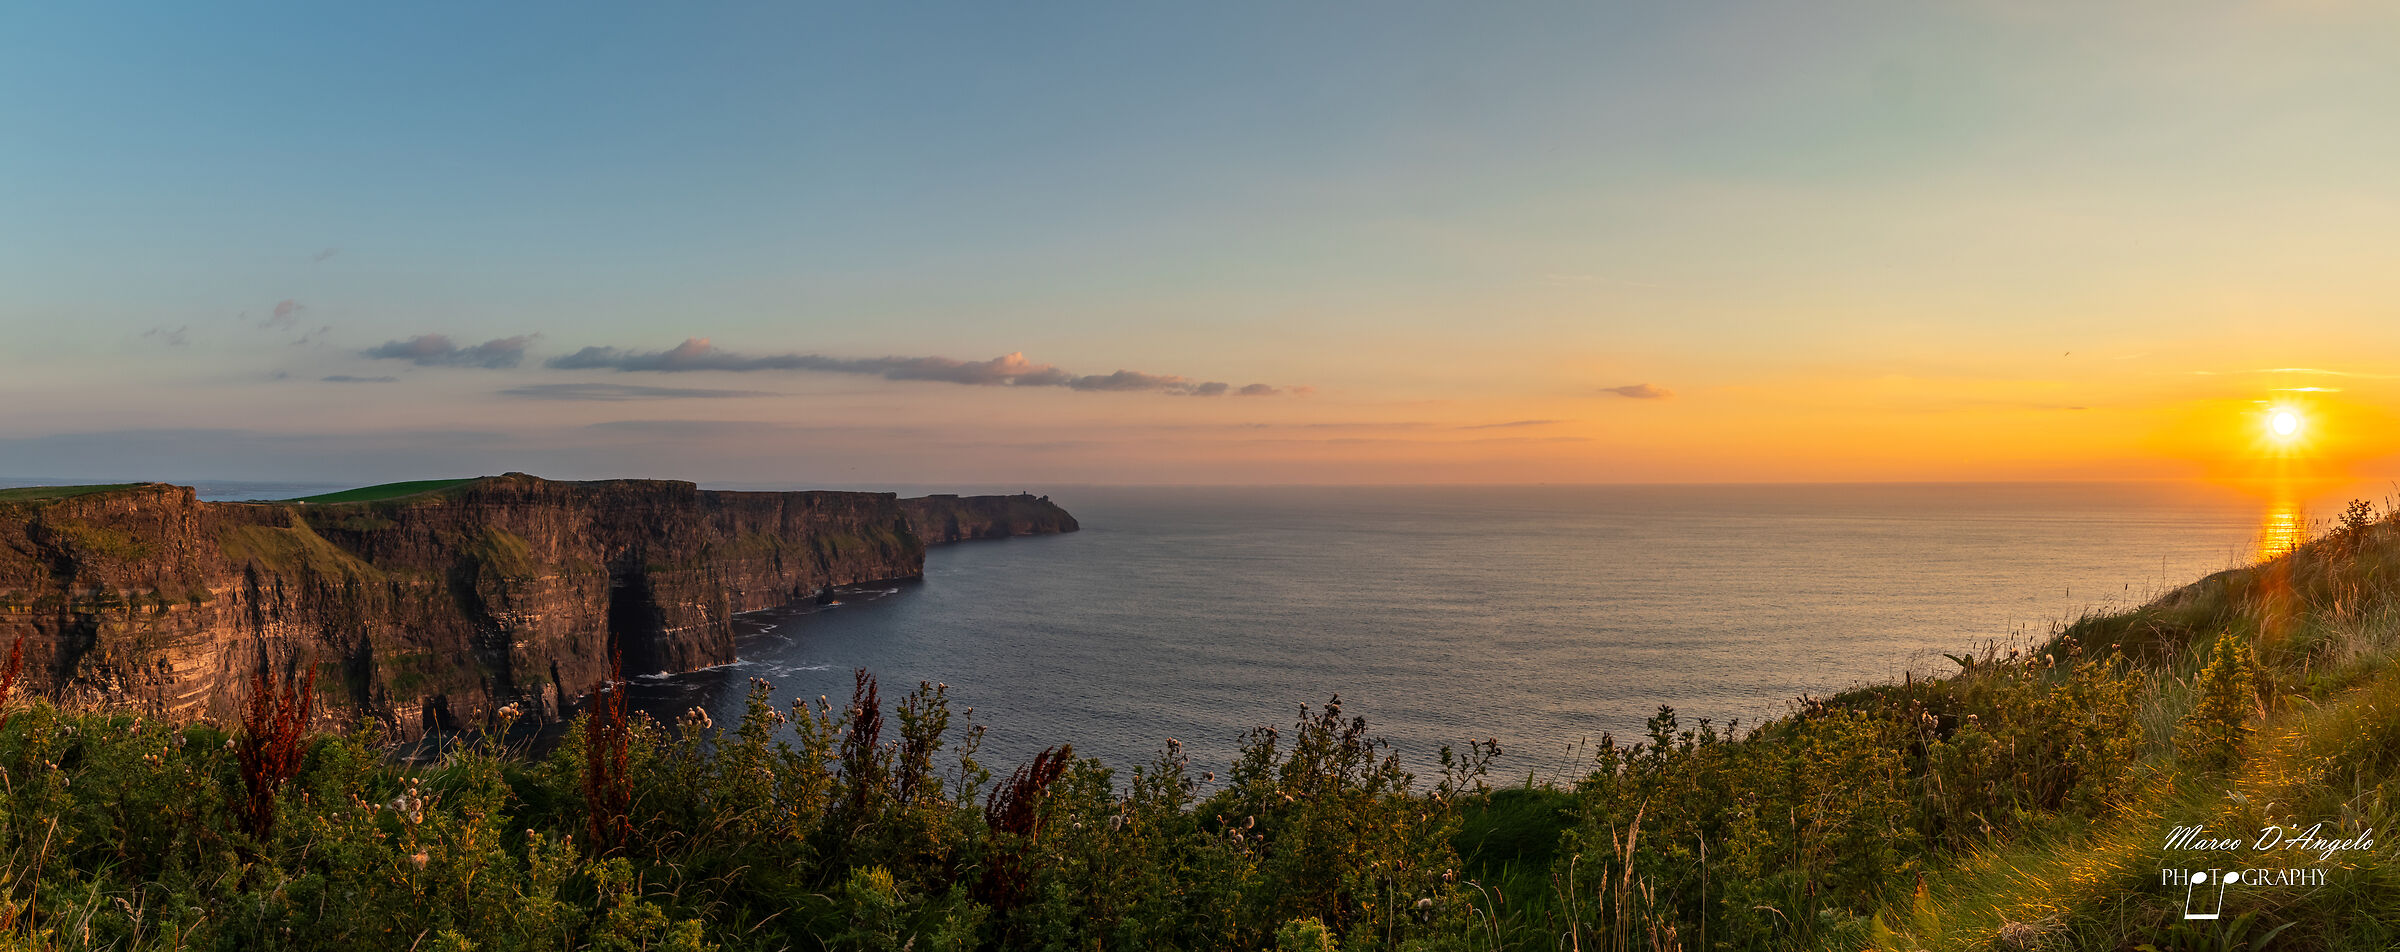 Cliffs of Moher sunset...